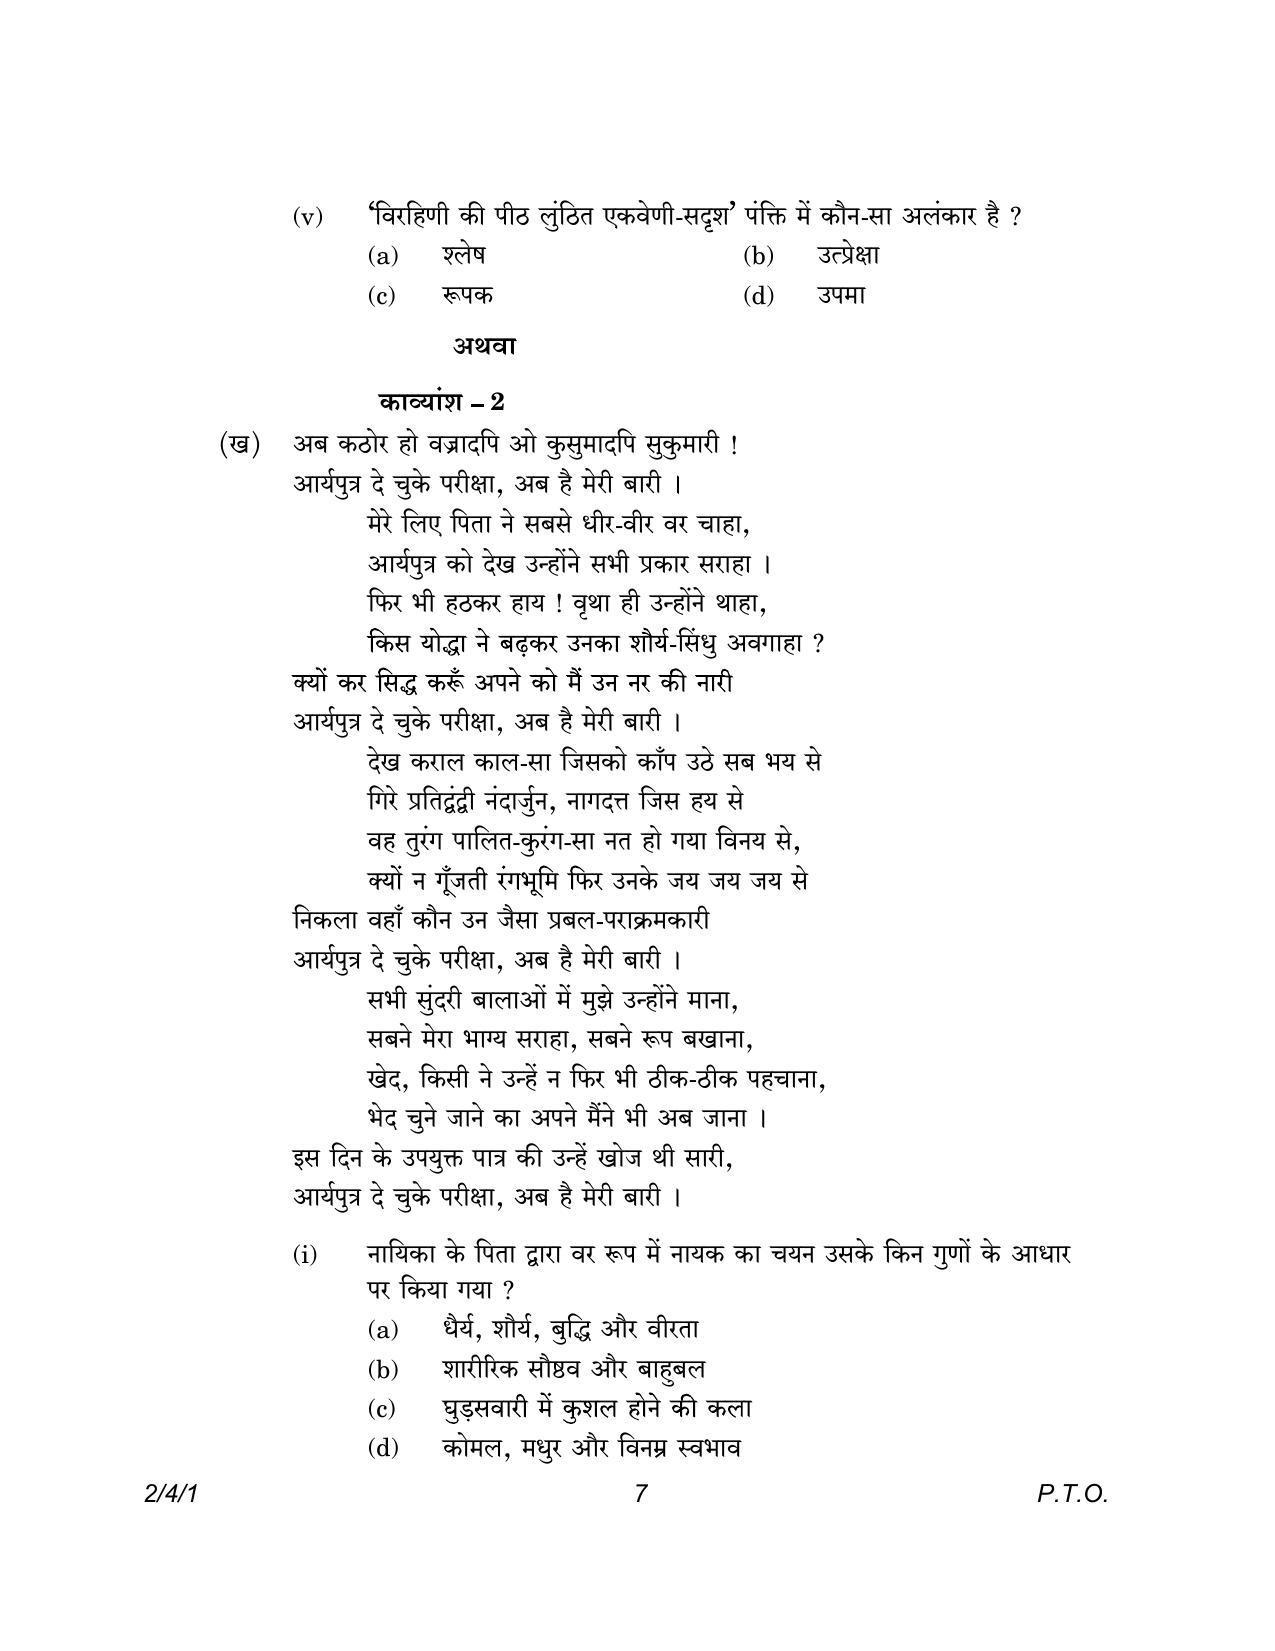 CBSE Class 12 2-4-1 Hindi Core version 2023 Question Paper - Page 7